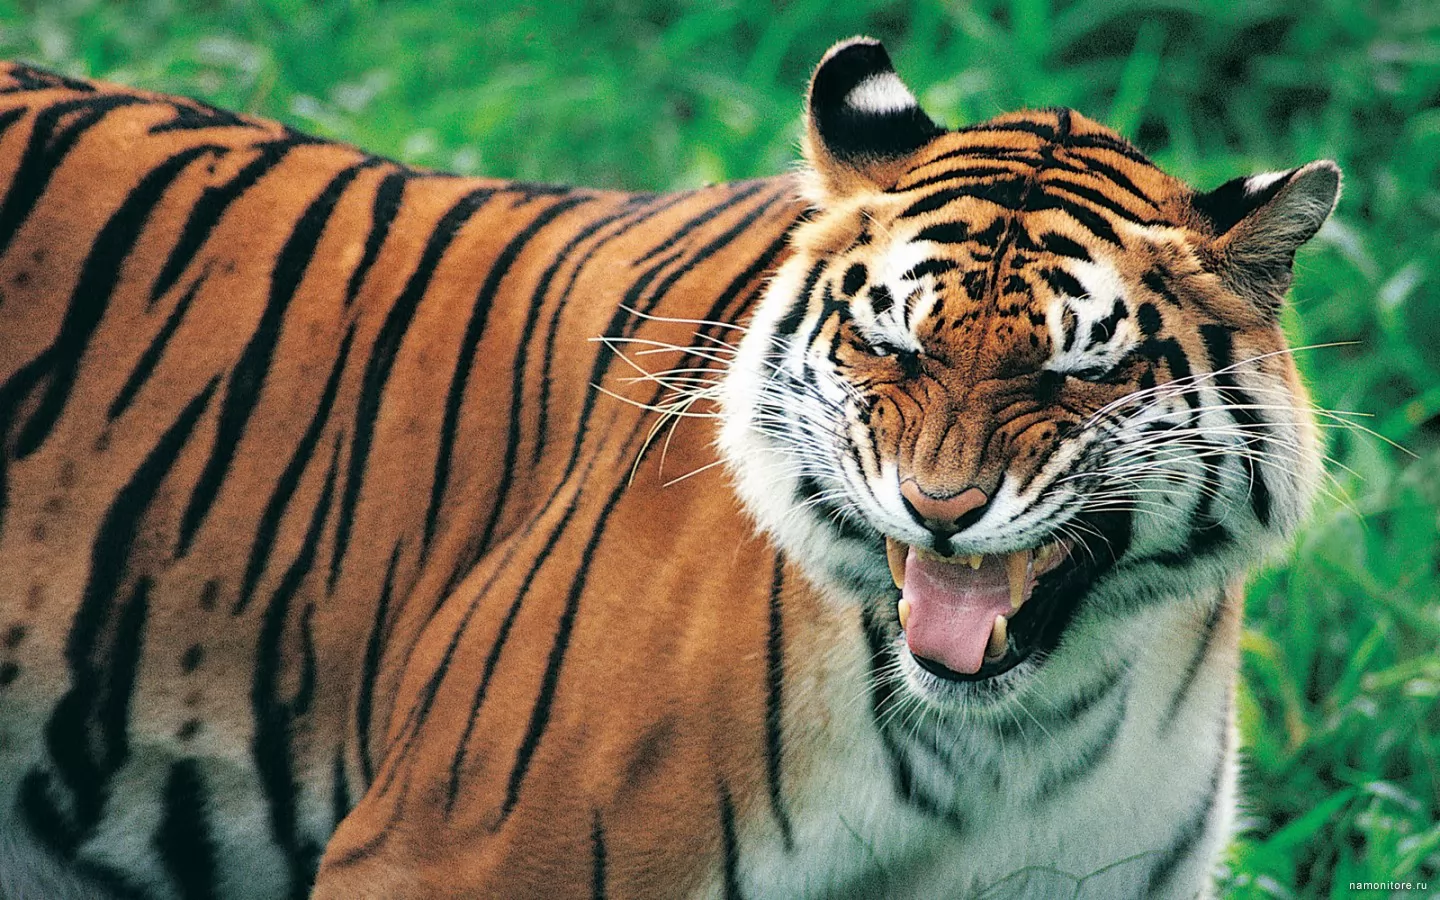 Tiger, animals, brown, cats, tigers x